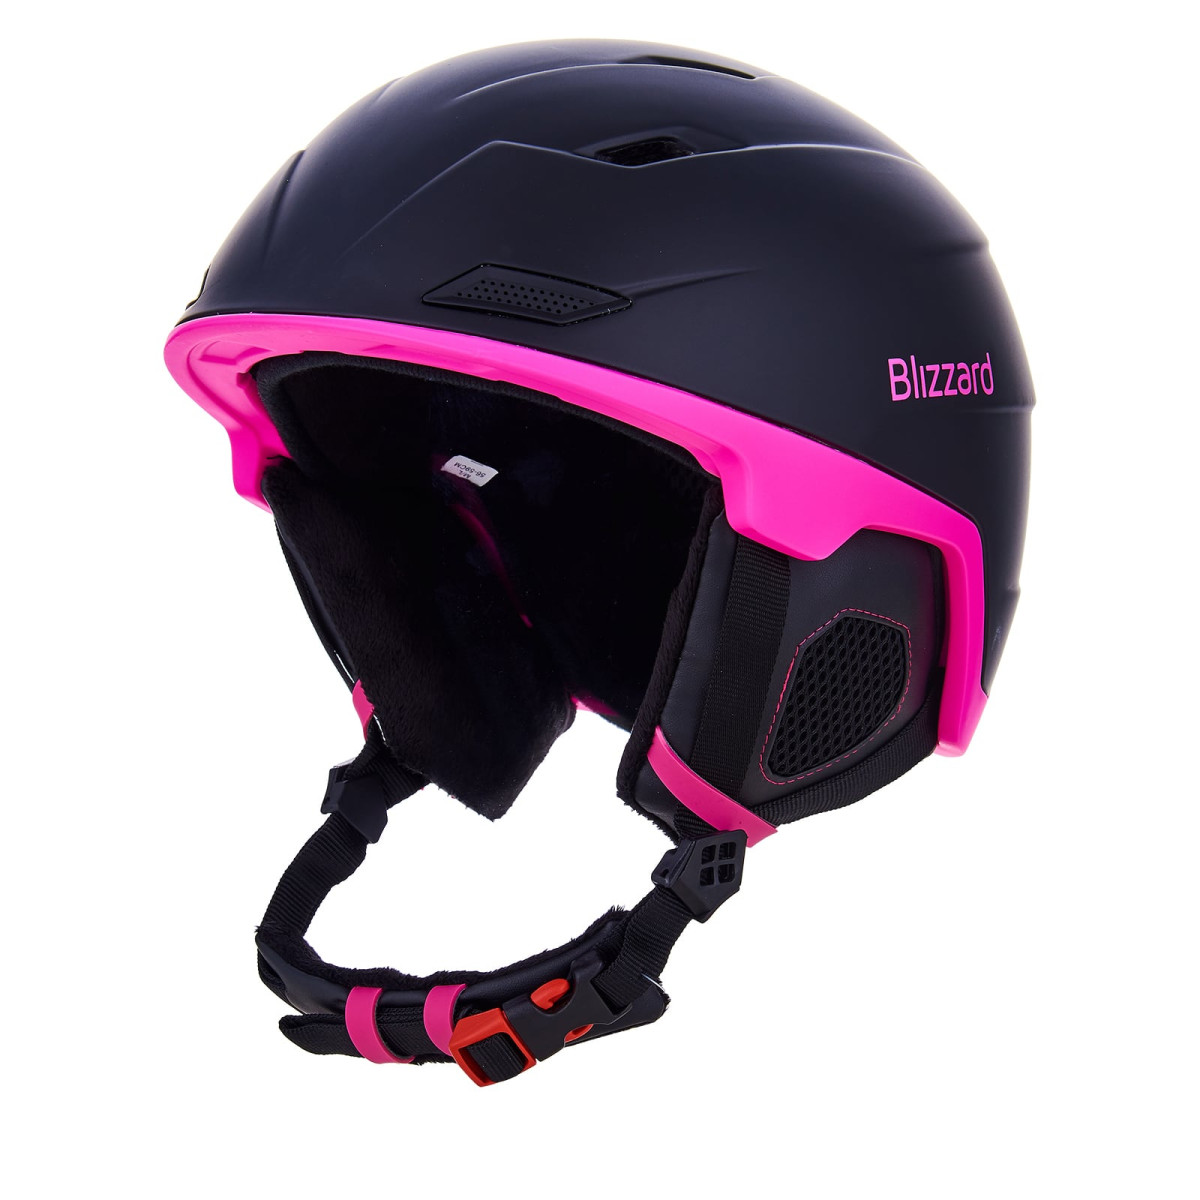 Blizzard Viva Double Ski Helmet - černá/růžová 2021/2022